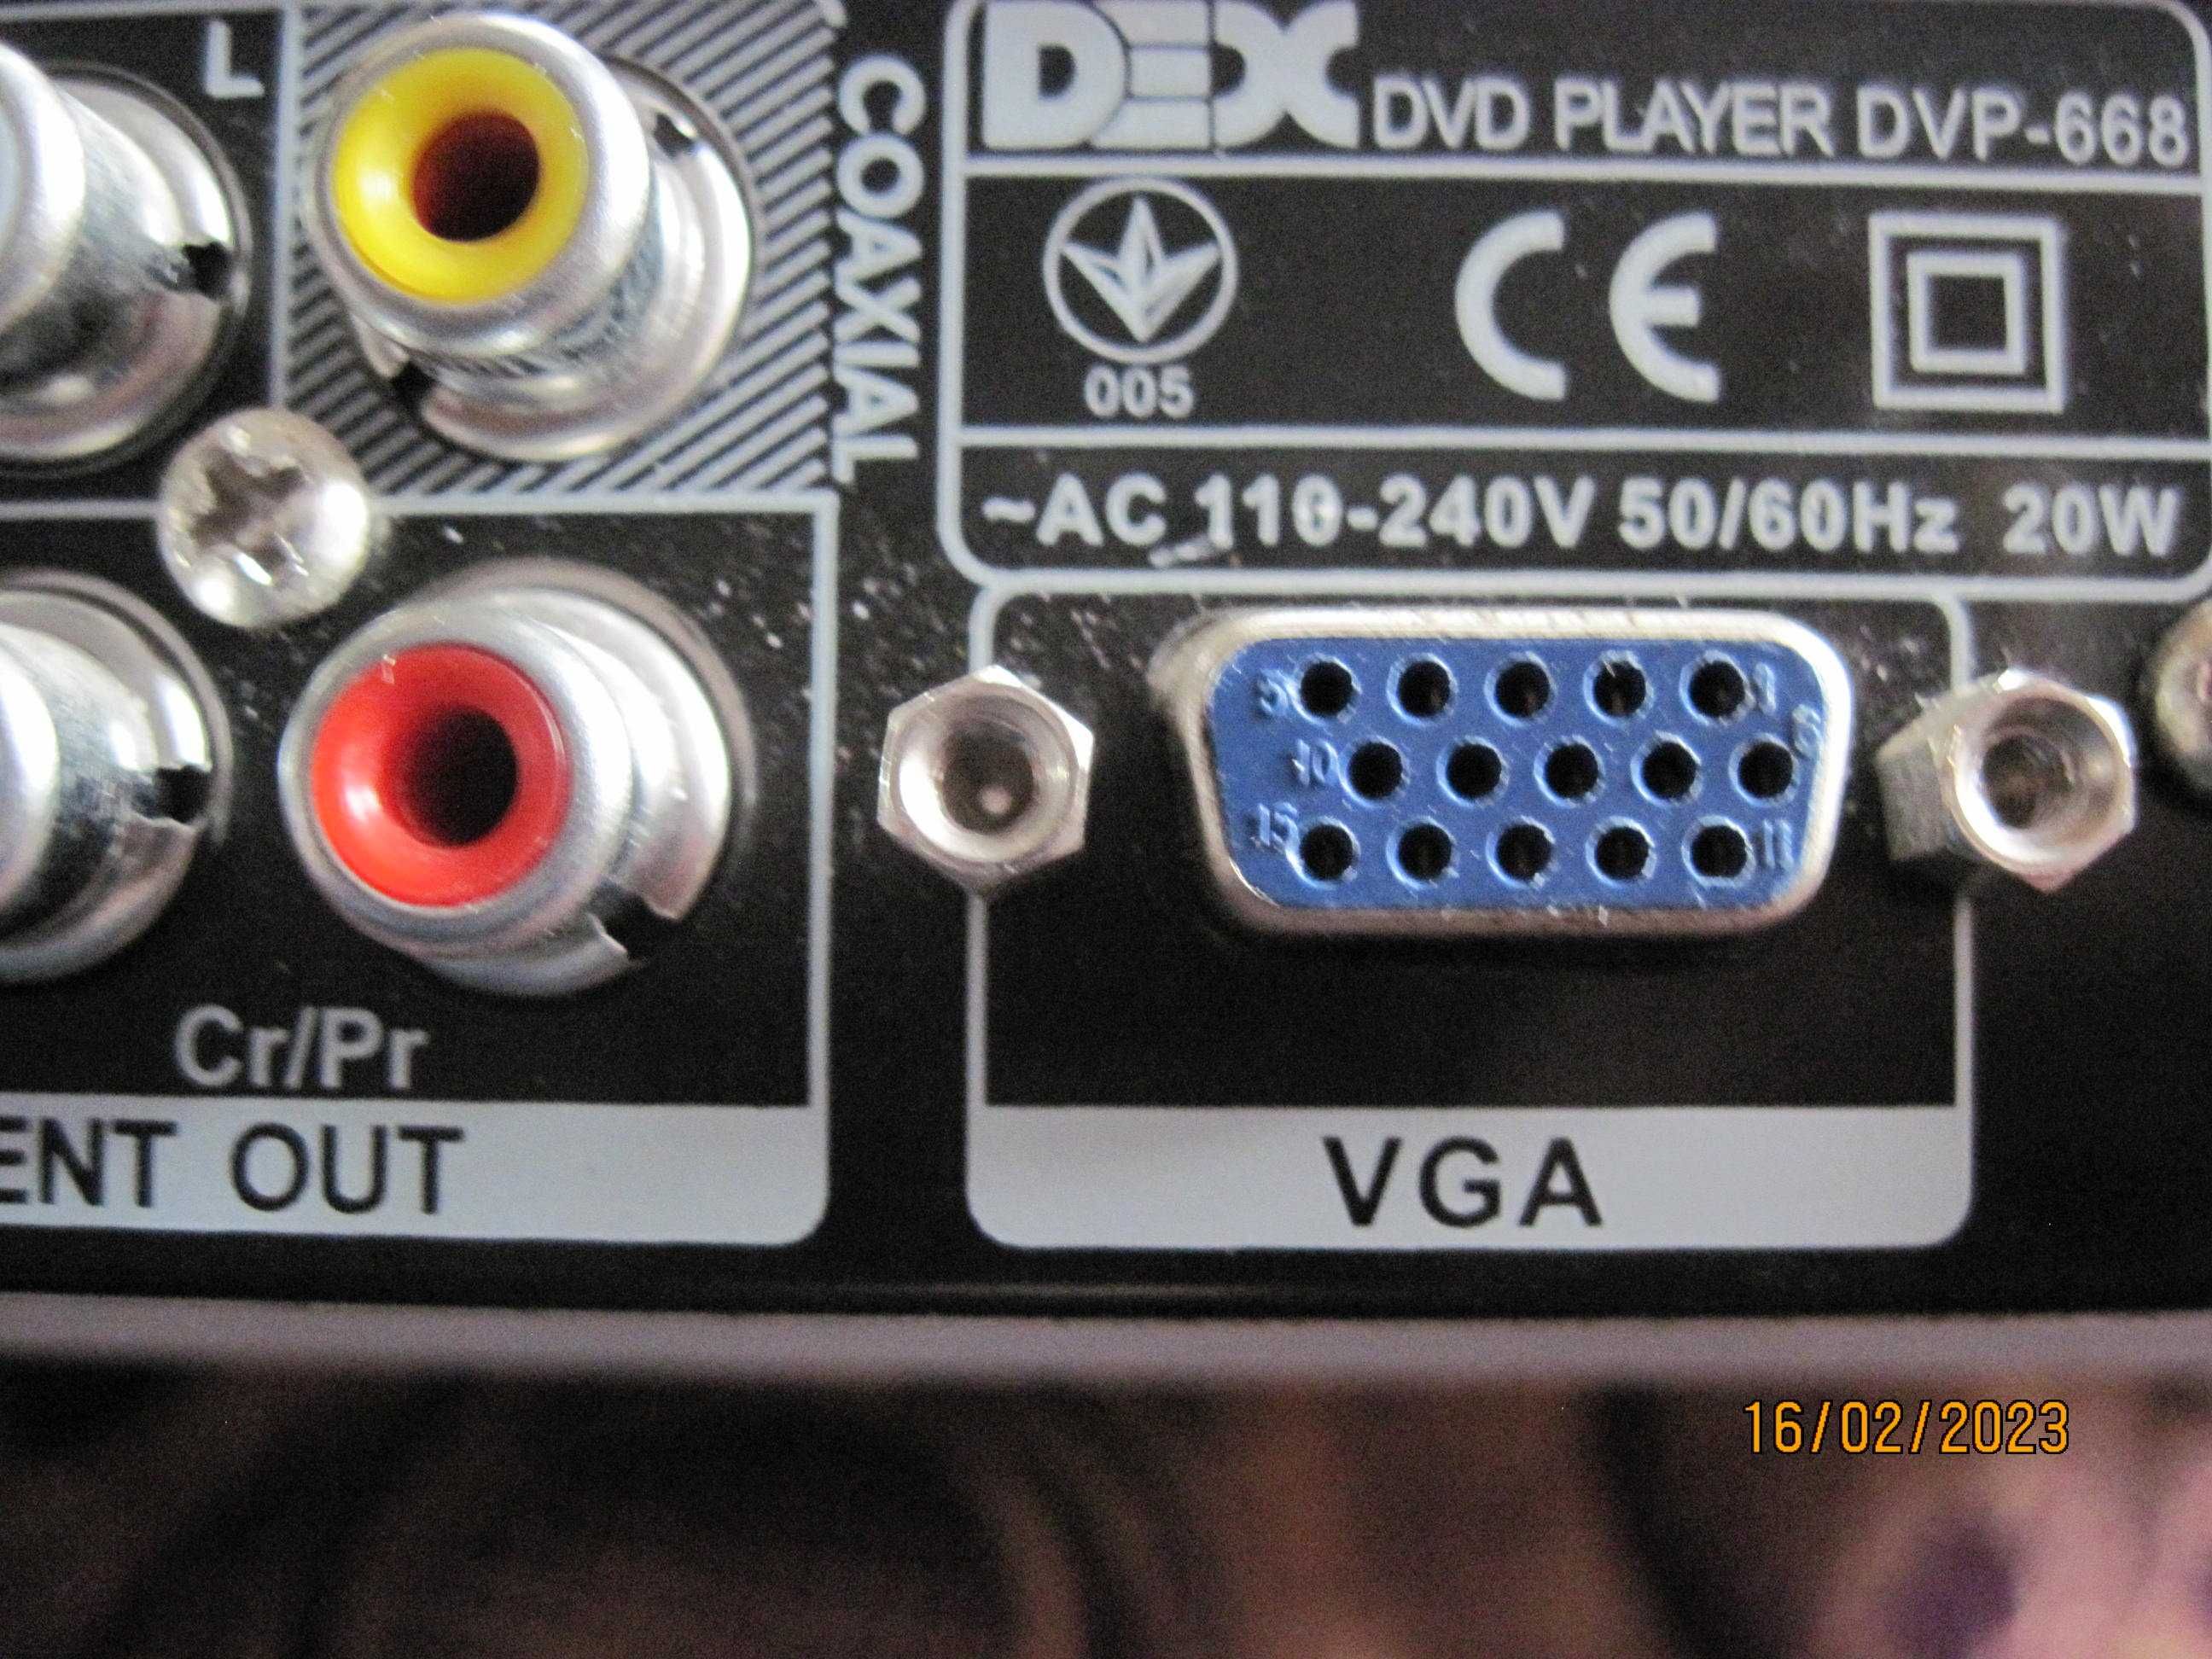 DVD player DEX DVP-668